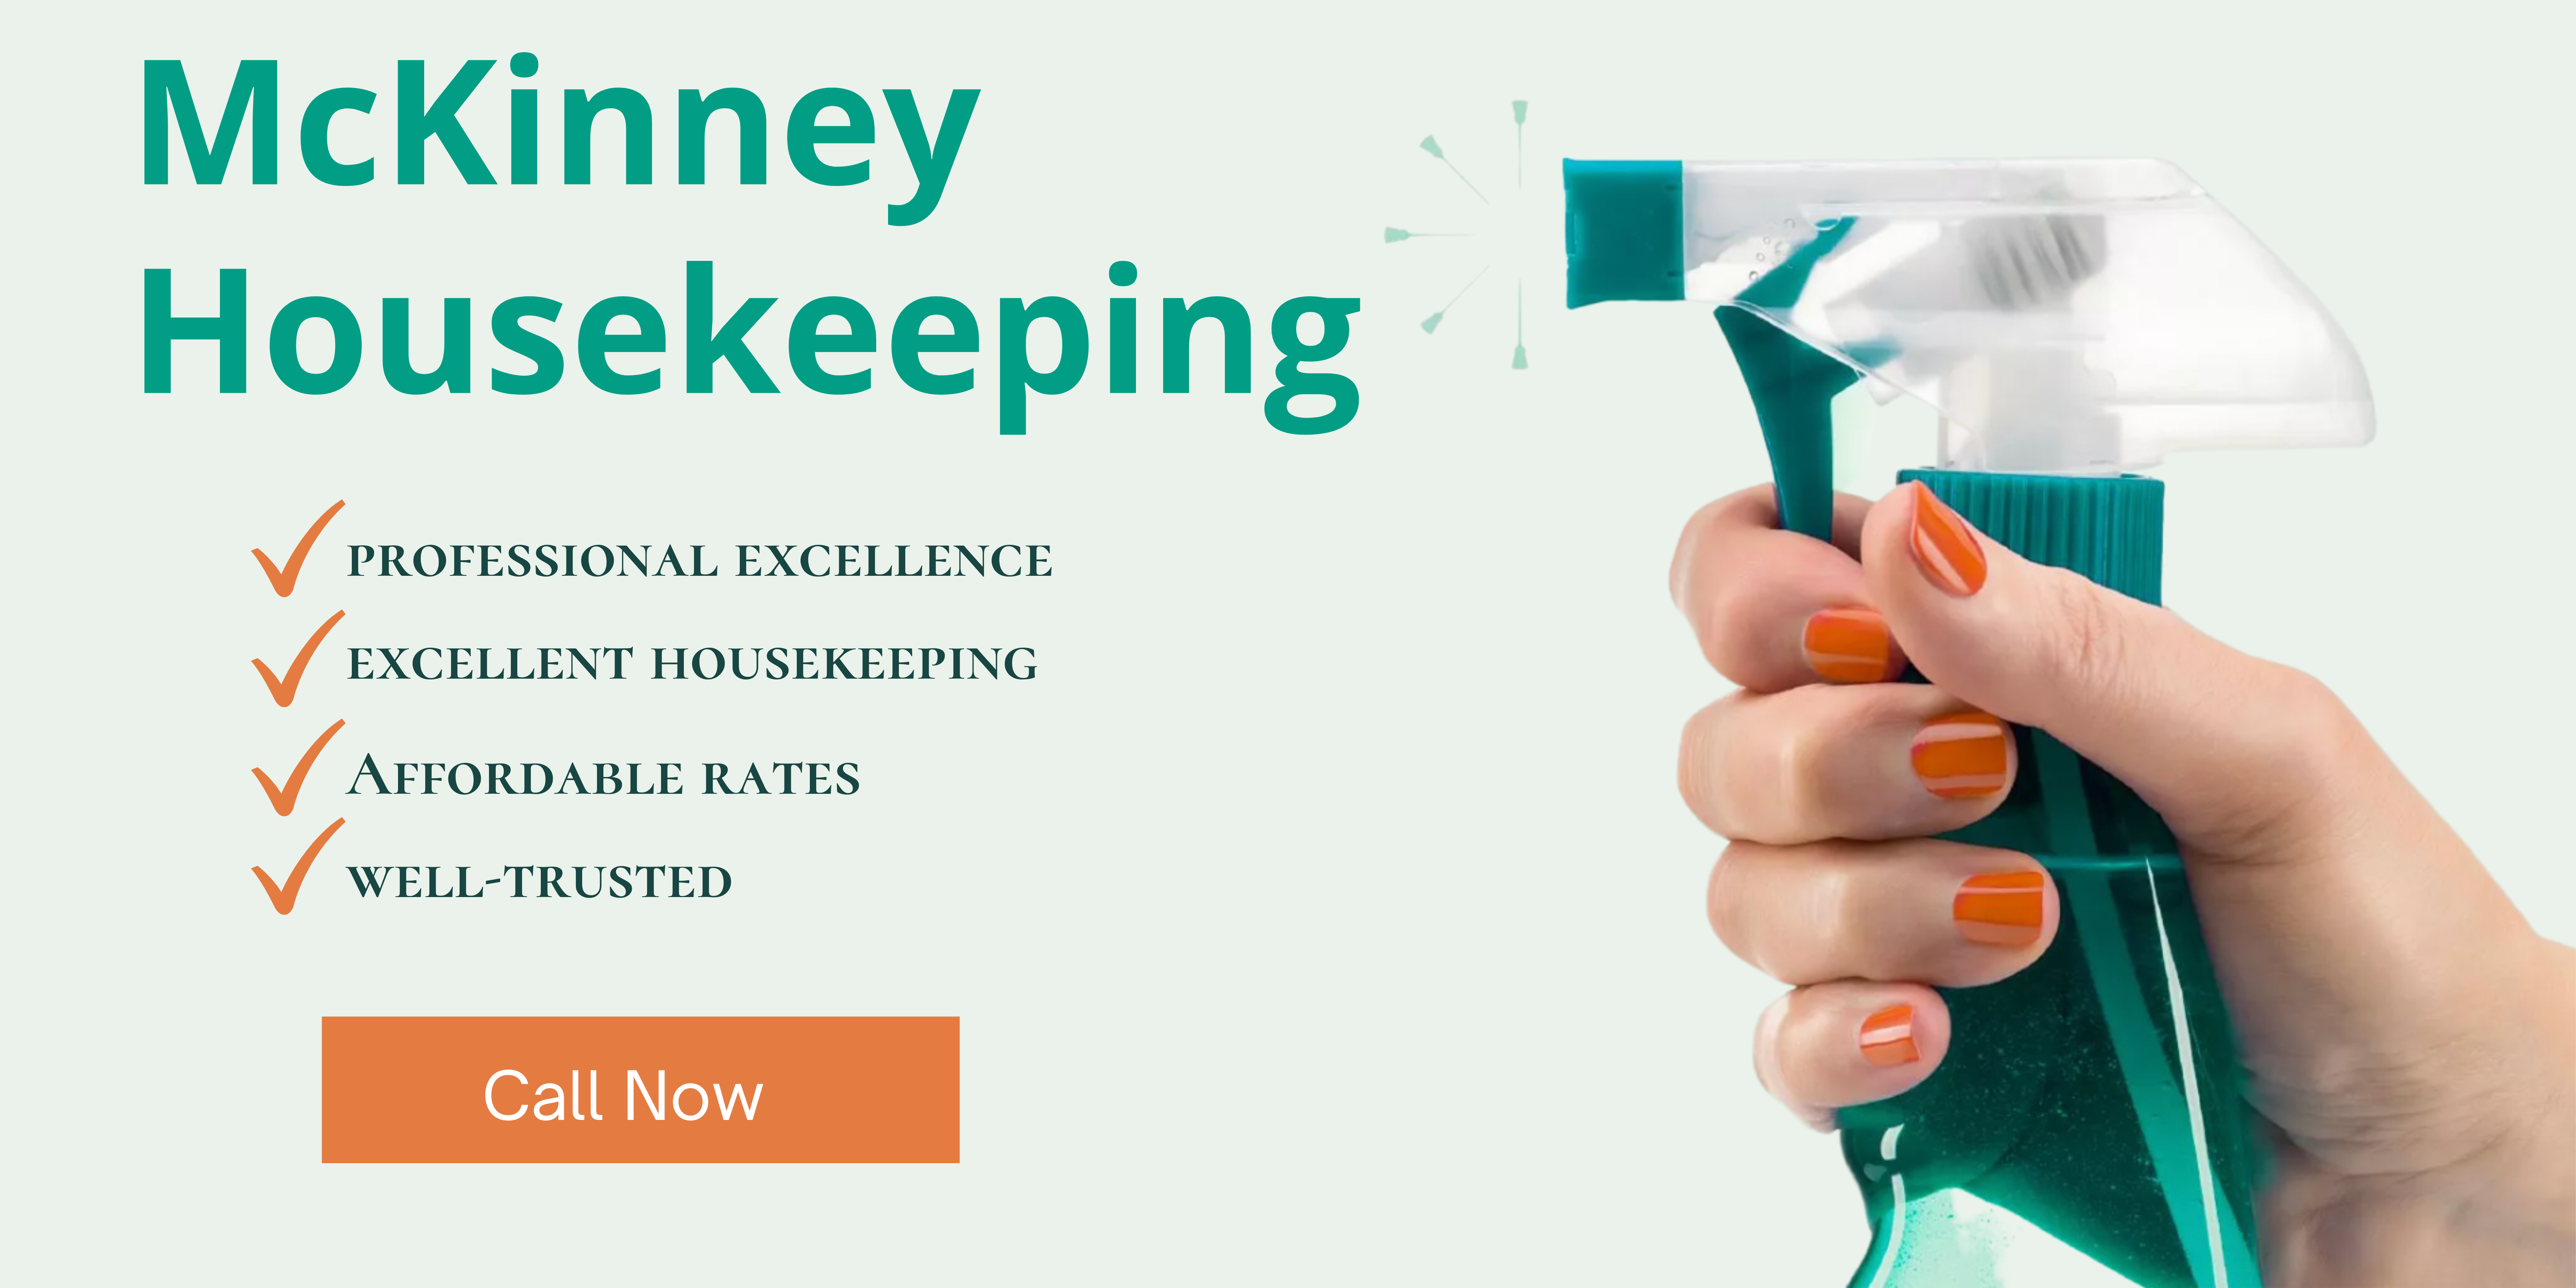 Mckinney housekeeping company